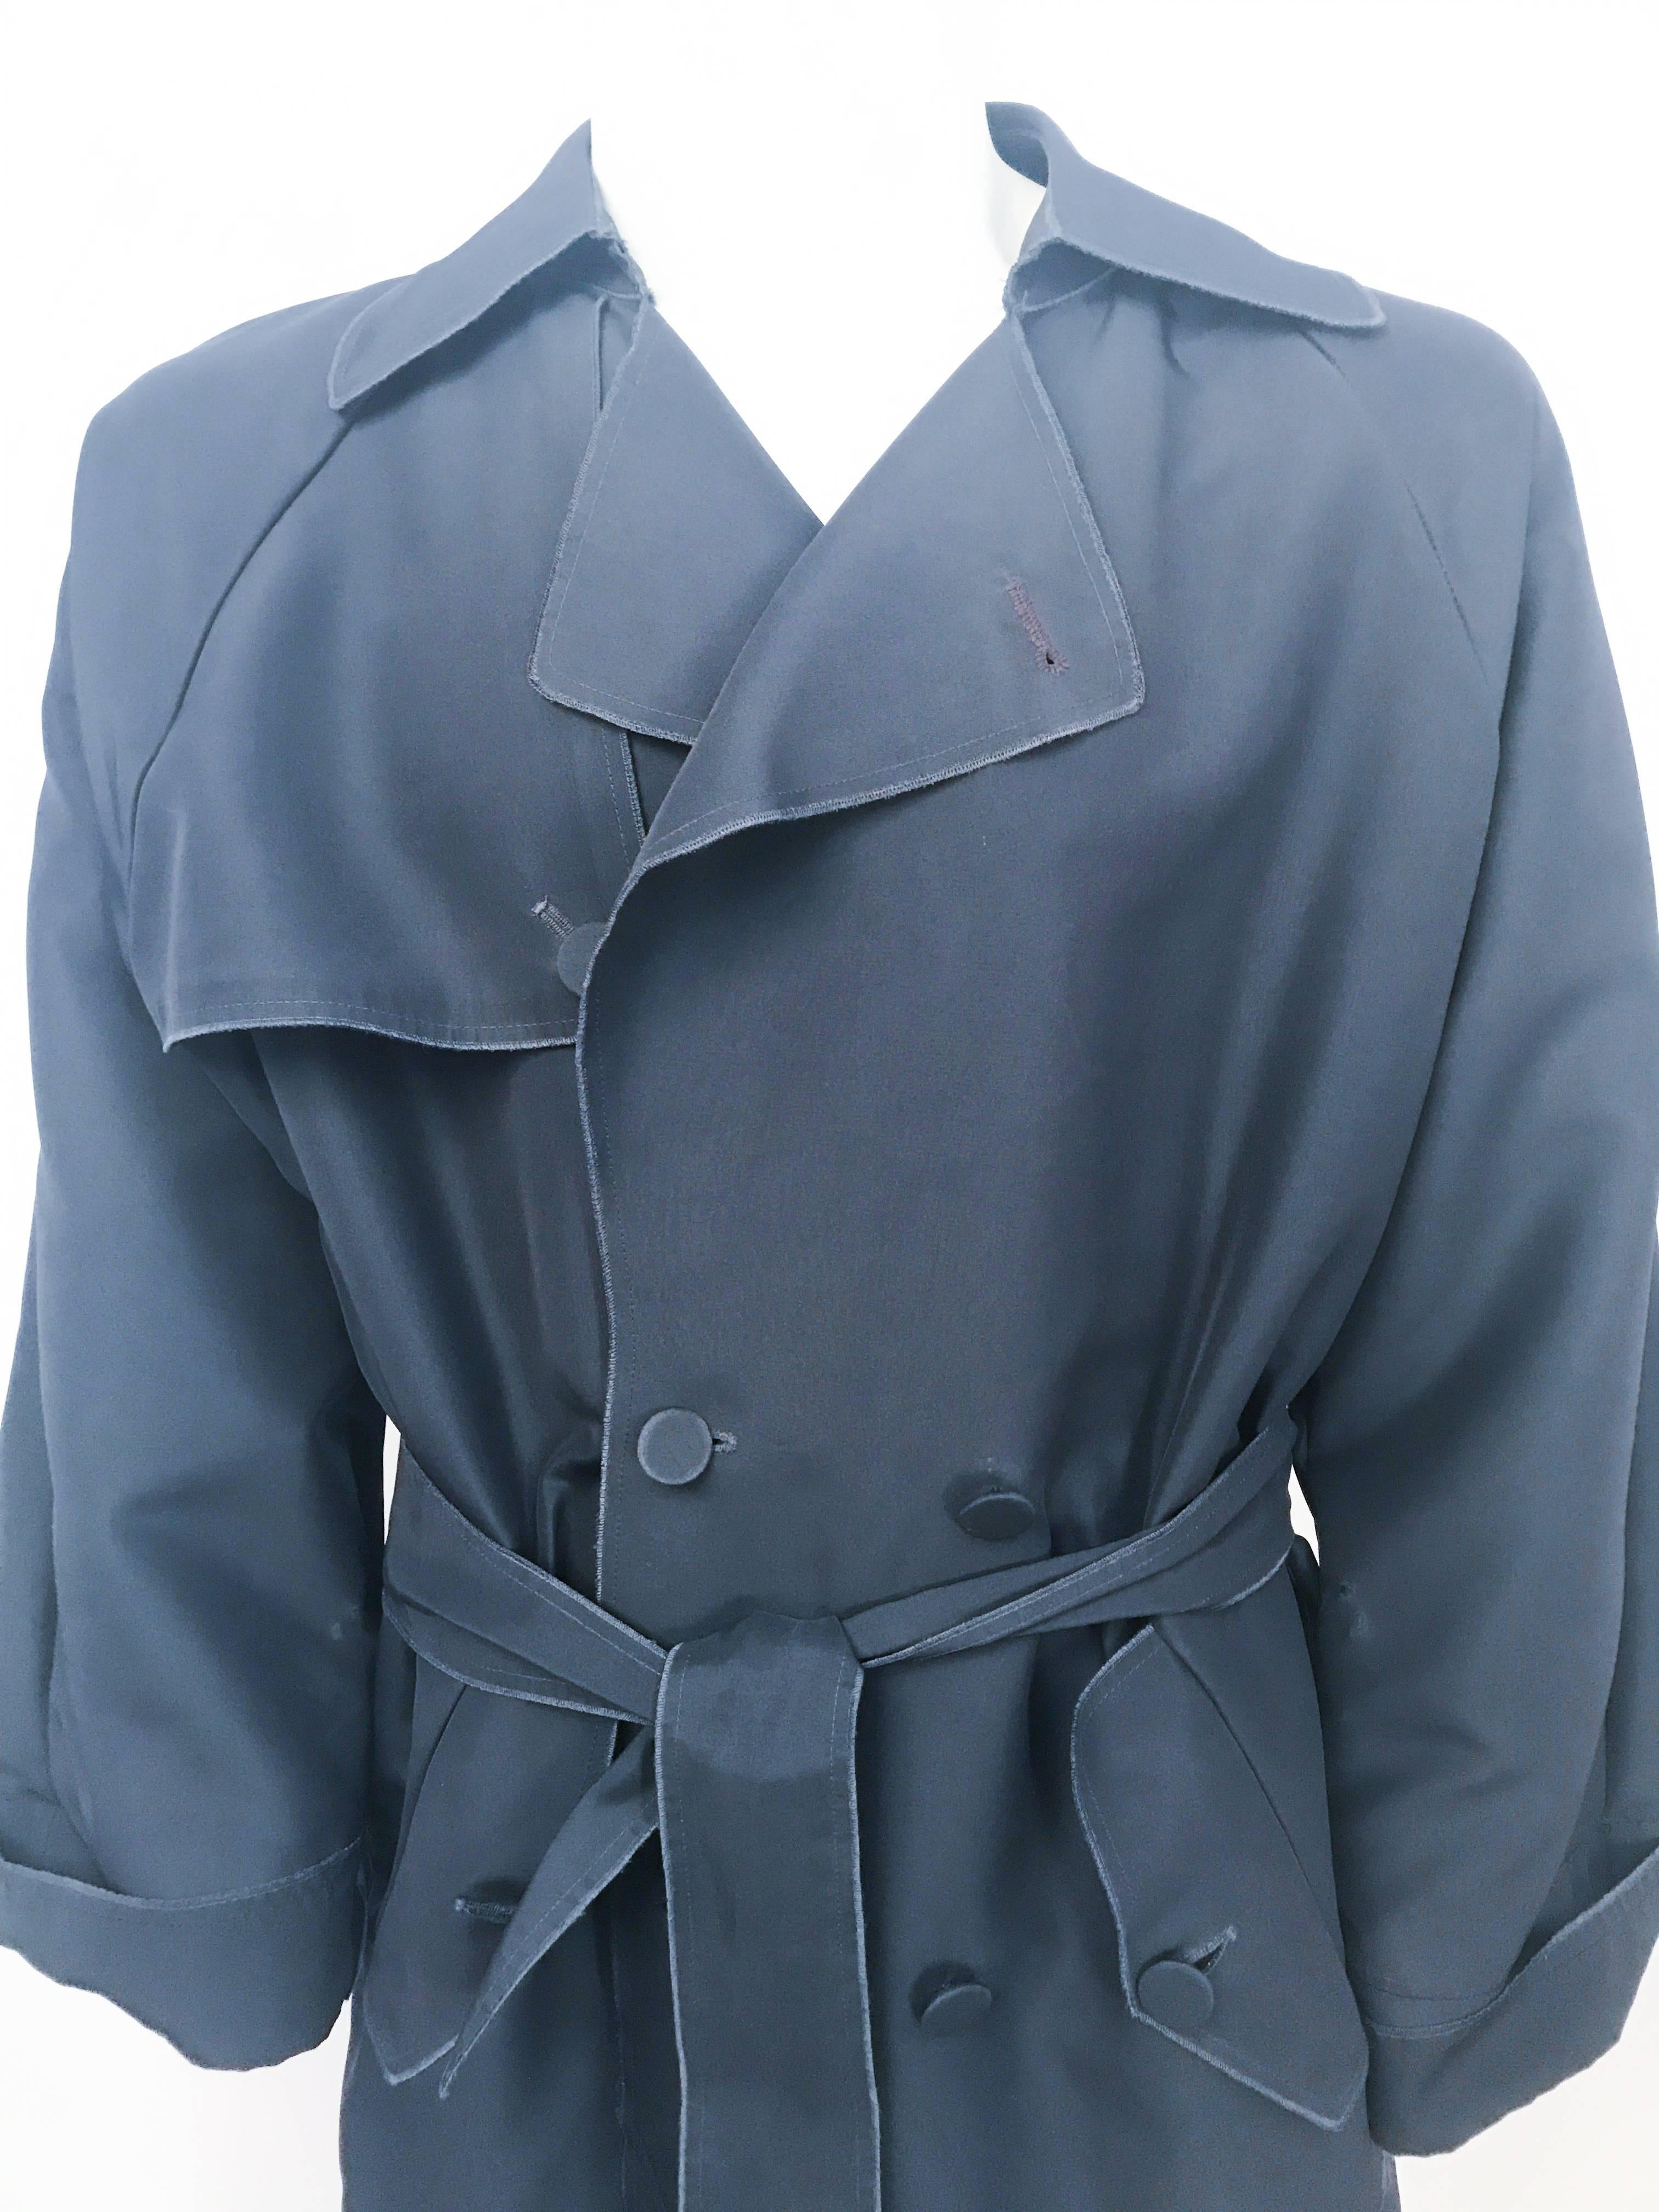 2000s Lanvin Slate Grey Coat. Slate grey coat with stylistically unfinished edges and original sash.